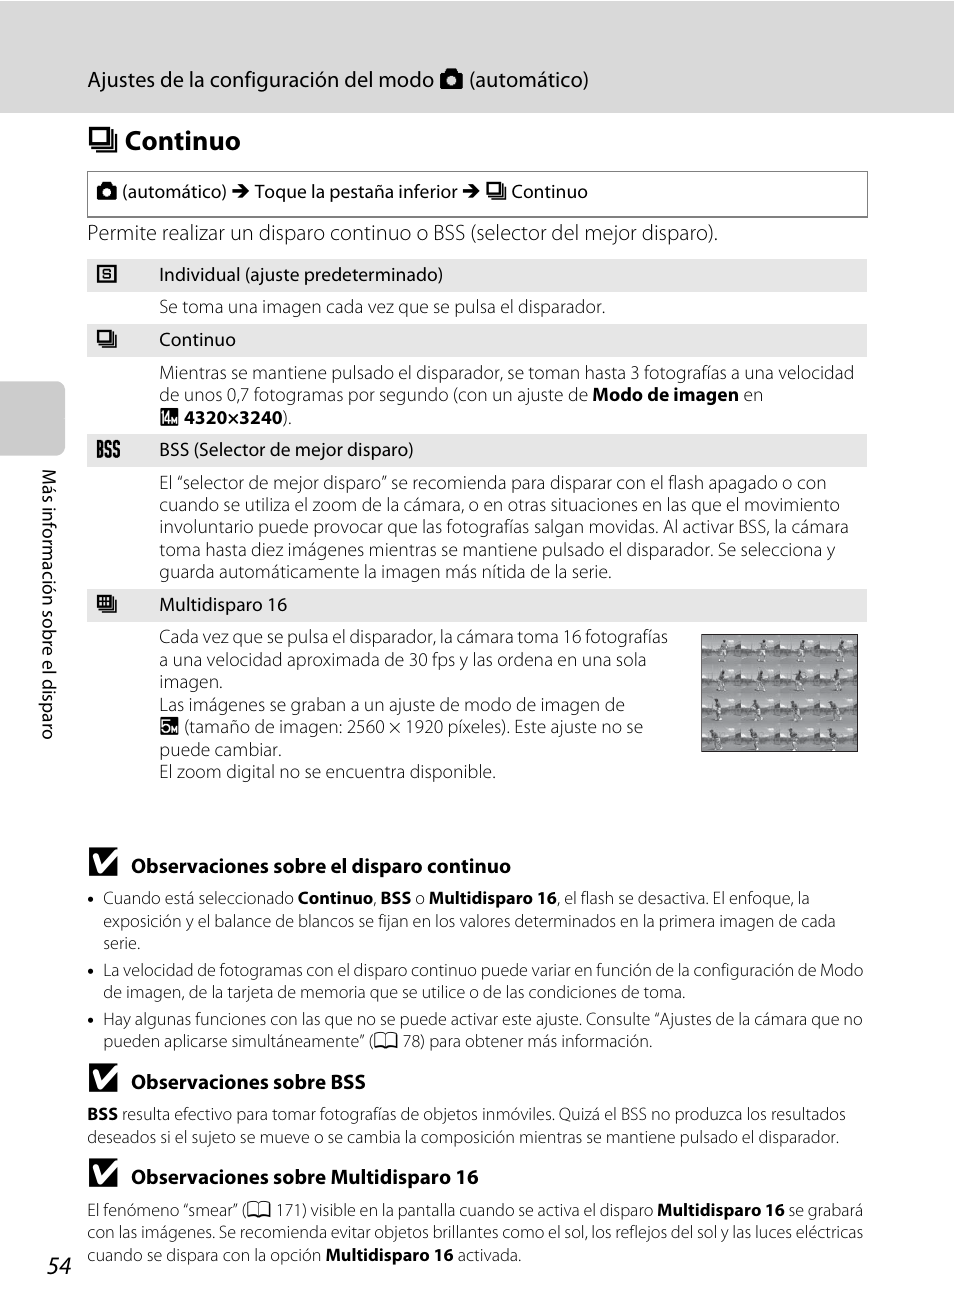 Continuo, C continuo, A 54 | A 54) | Nikon Coolpix S4100 Manual del usuario | Página 66 / 208